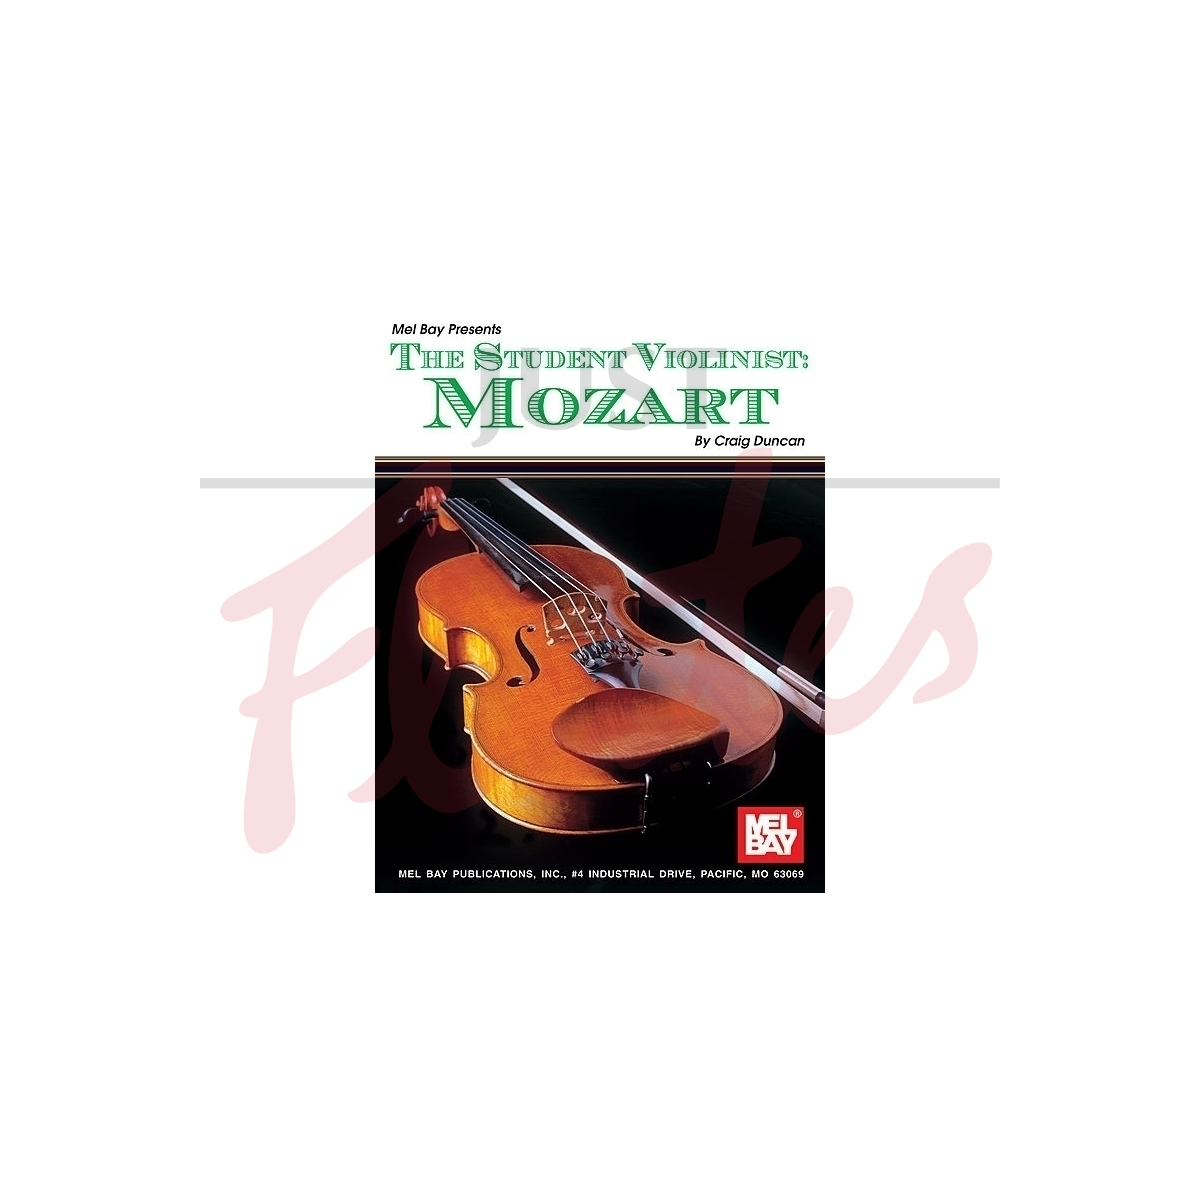 The Student Violinist: Mozart